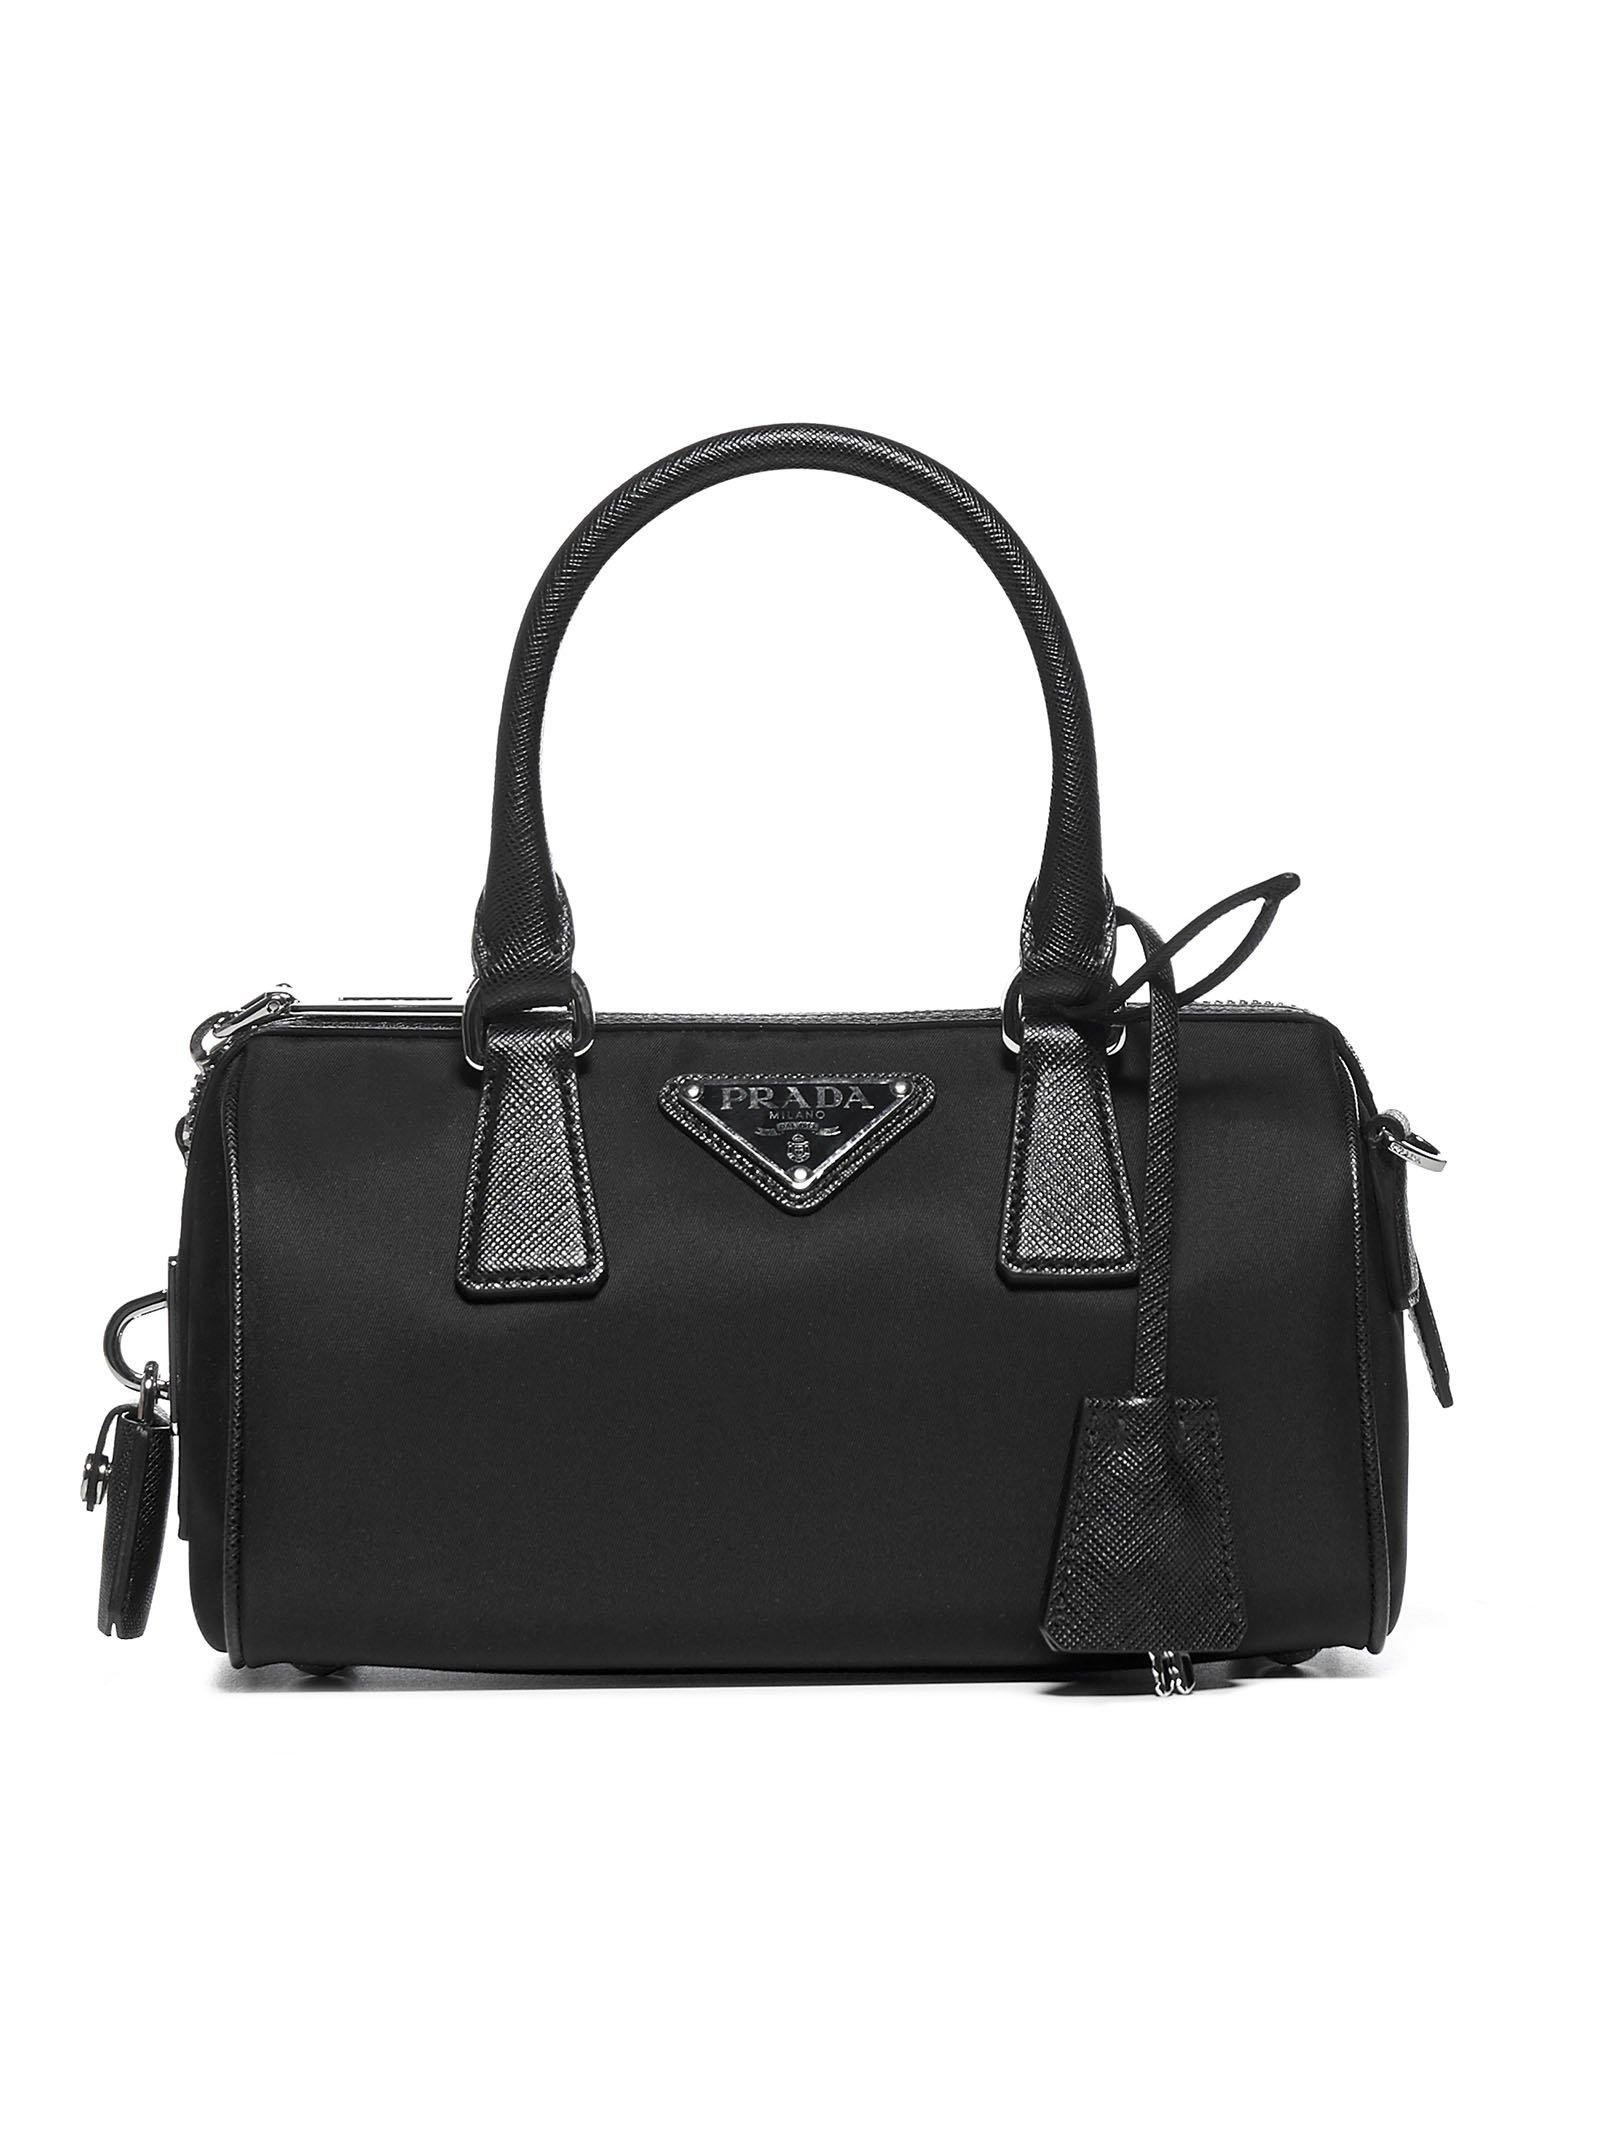 Prada Re-edition 2005 Nylon And Saffiano Leather Bag in Black | Lyst